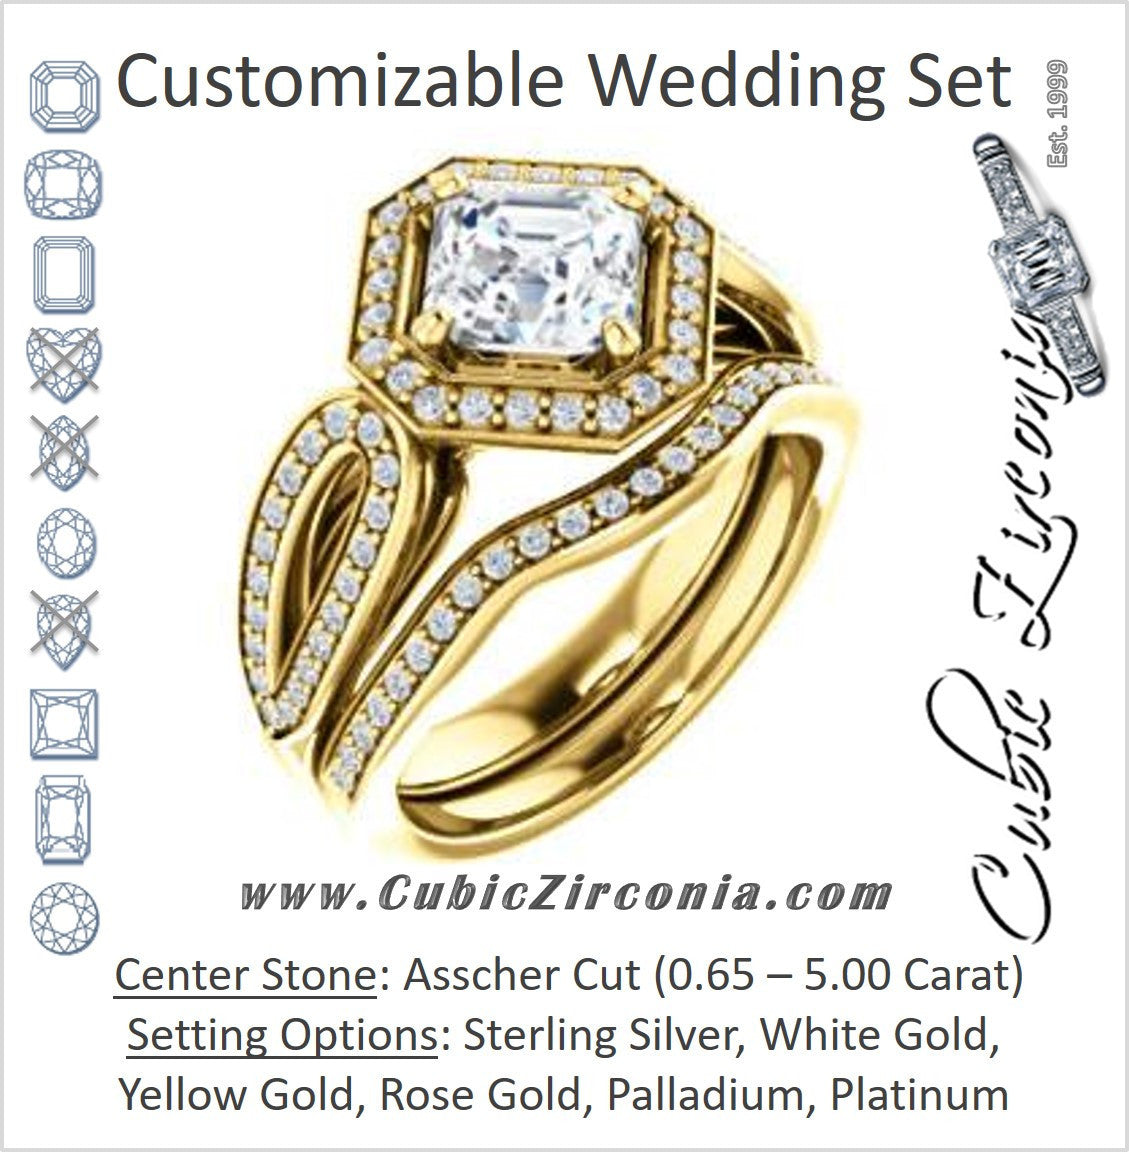 CZ Wedding Set, featuring The Jordyn Elitza engagement ring (Customizable Halo-Style Asscher Cut with Twisting Pavé Split-Shank)